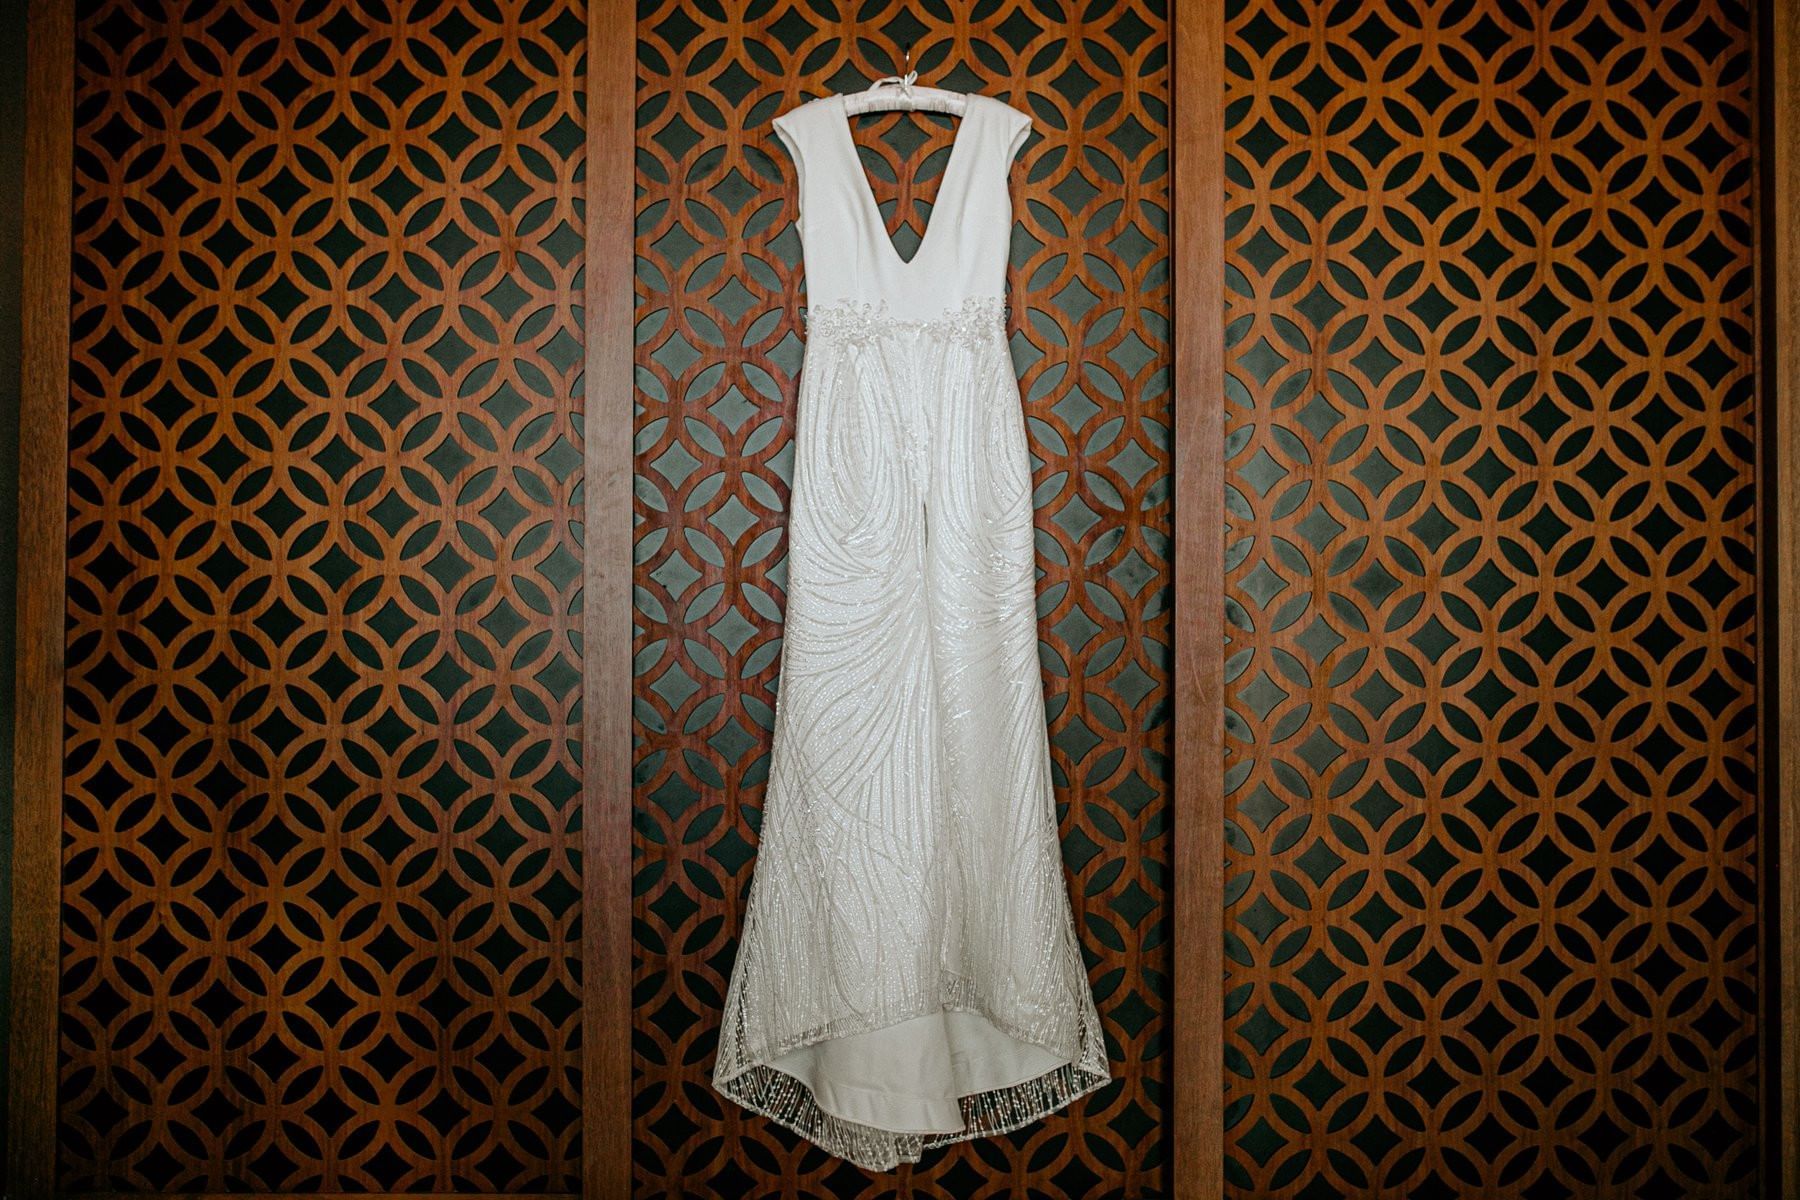 A bride dress on a hanger at Fiesta Americana Hotels